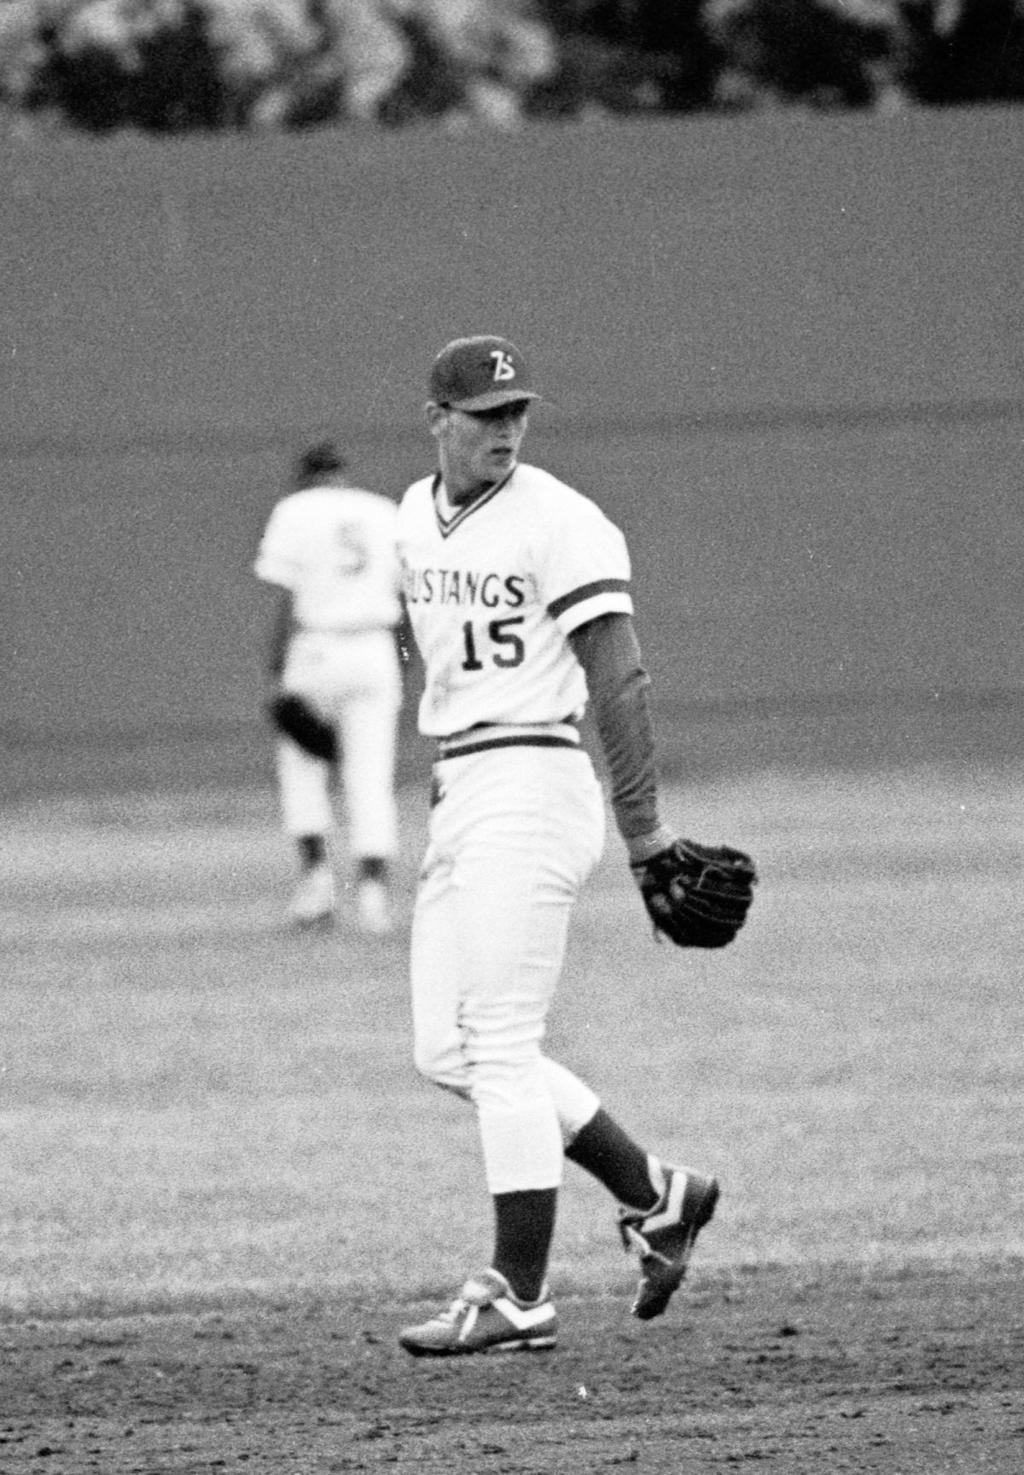 Hoffman, Trevor  Baseball Hall of Fame